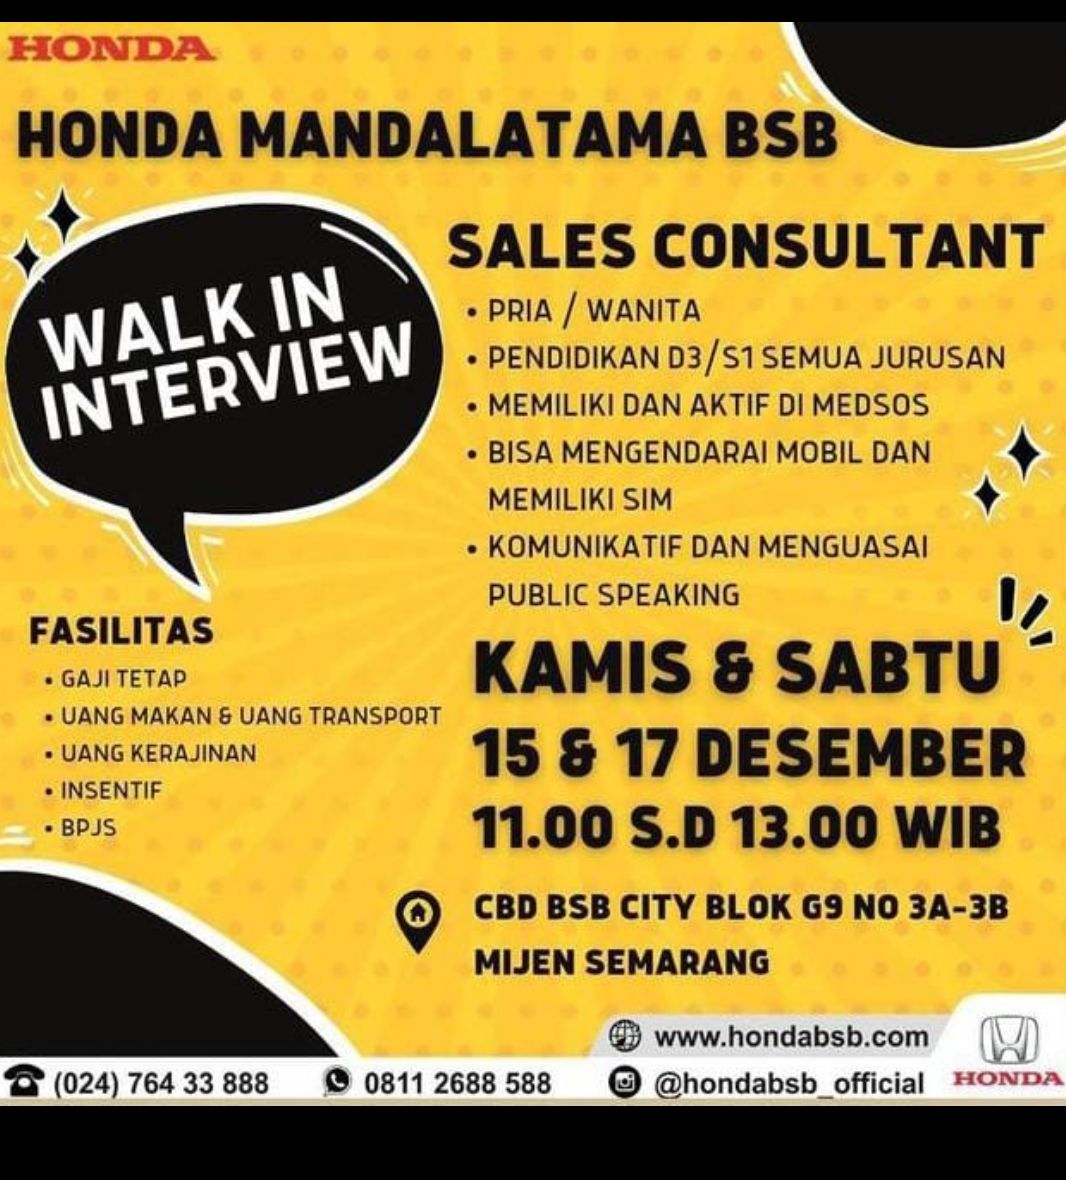 Honda Mandalatama BSB membuka lowongan kerja(loker) sebagai sales consultant.